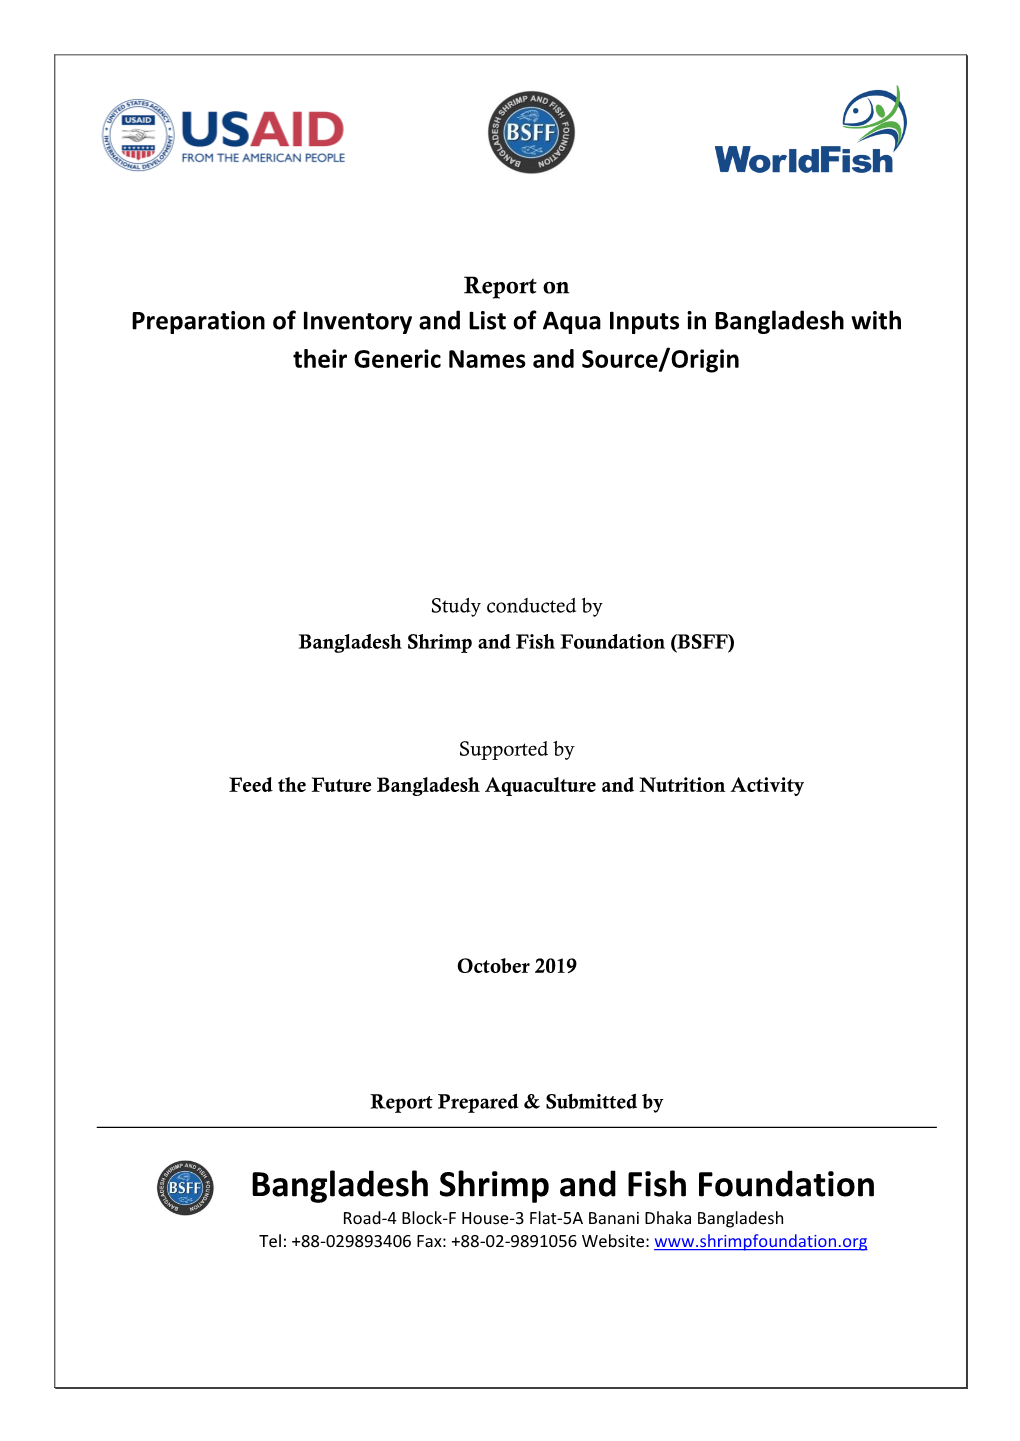 Bangladesh Shrimp and Fish Foundation (BSFF)